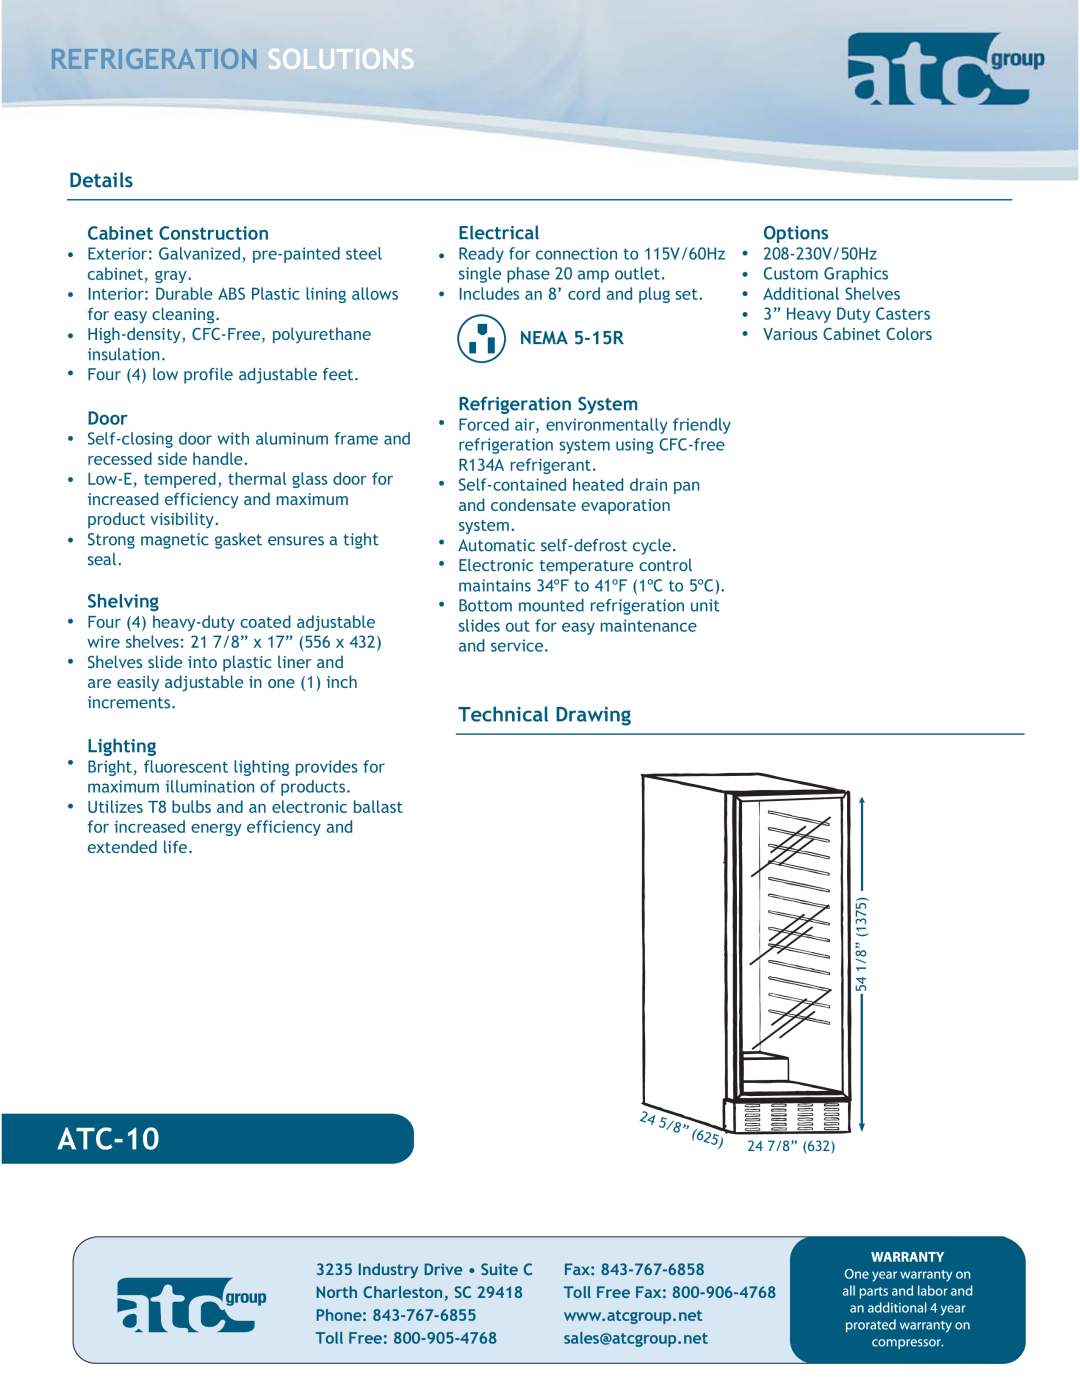 ATC Group ATC-10 3” Heavy Duty Casters, Various Cabinet Colors, Cabinet Construction, Electrical, Options, NEMA 5-15R 